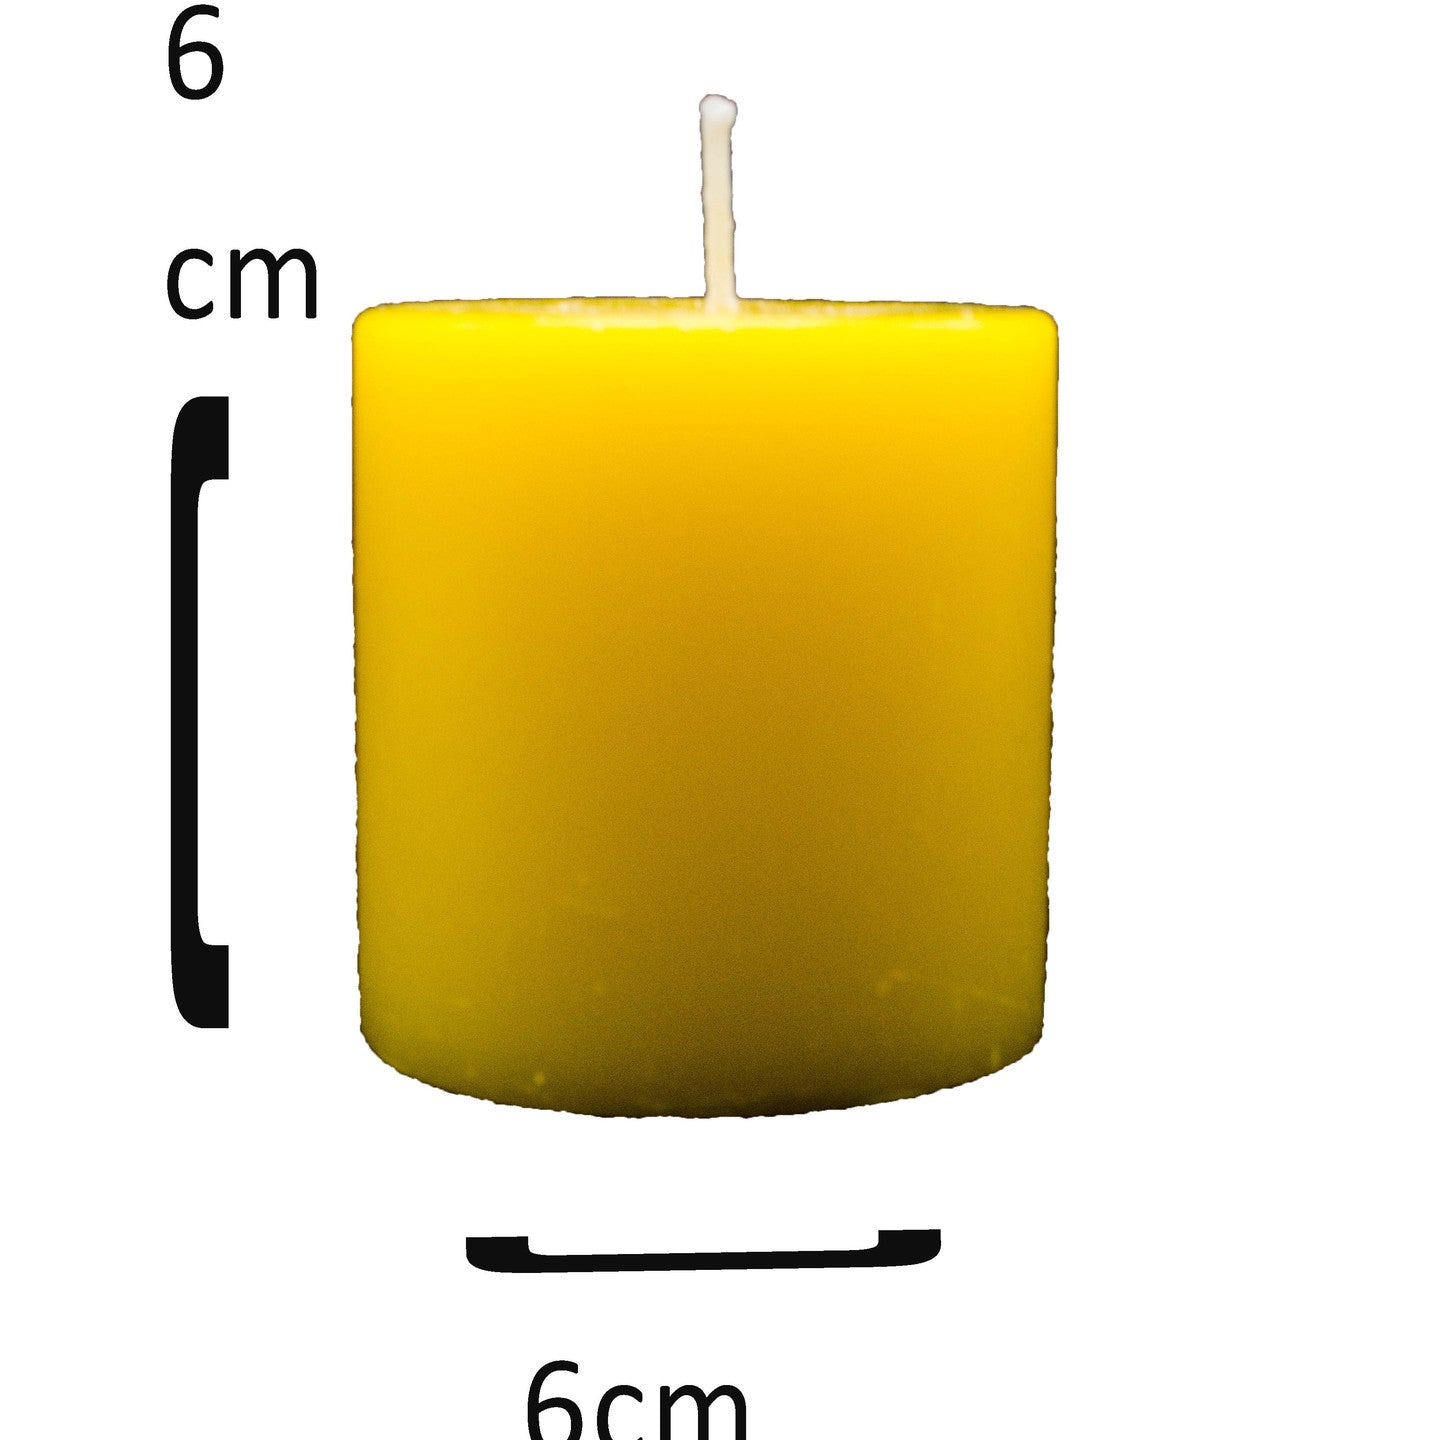 AuraDecor Lemon Fragrance 2.5*2.5 Inch Pillar Candle - auradecor.co.in